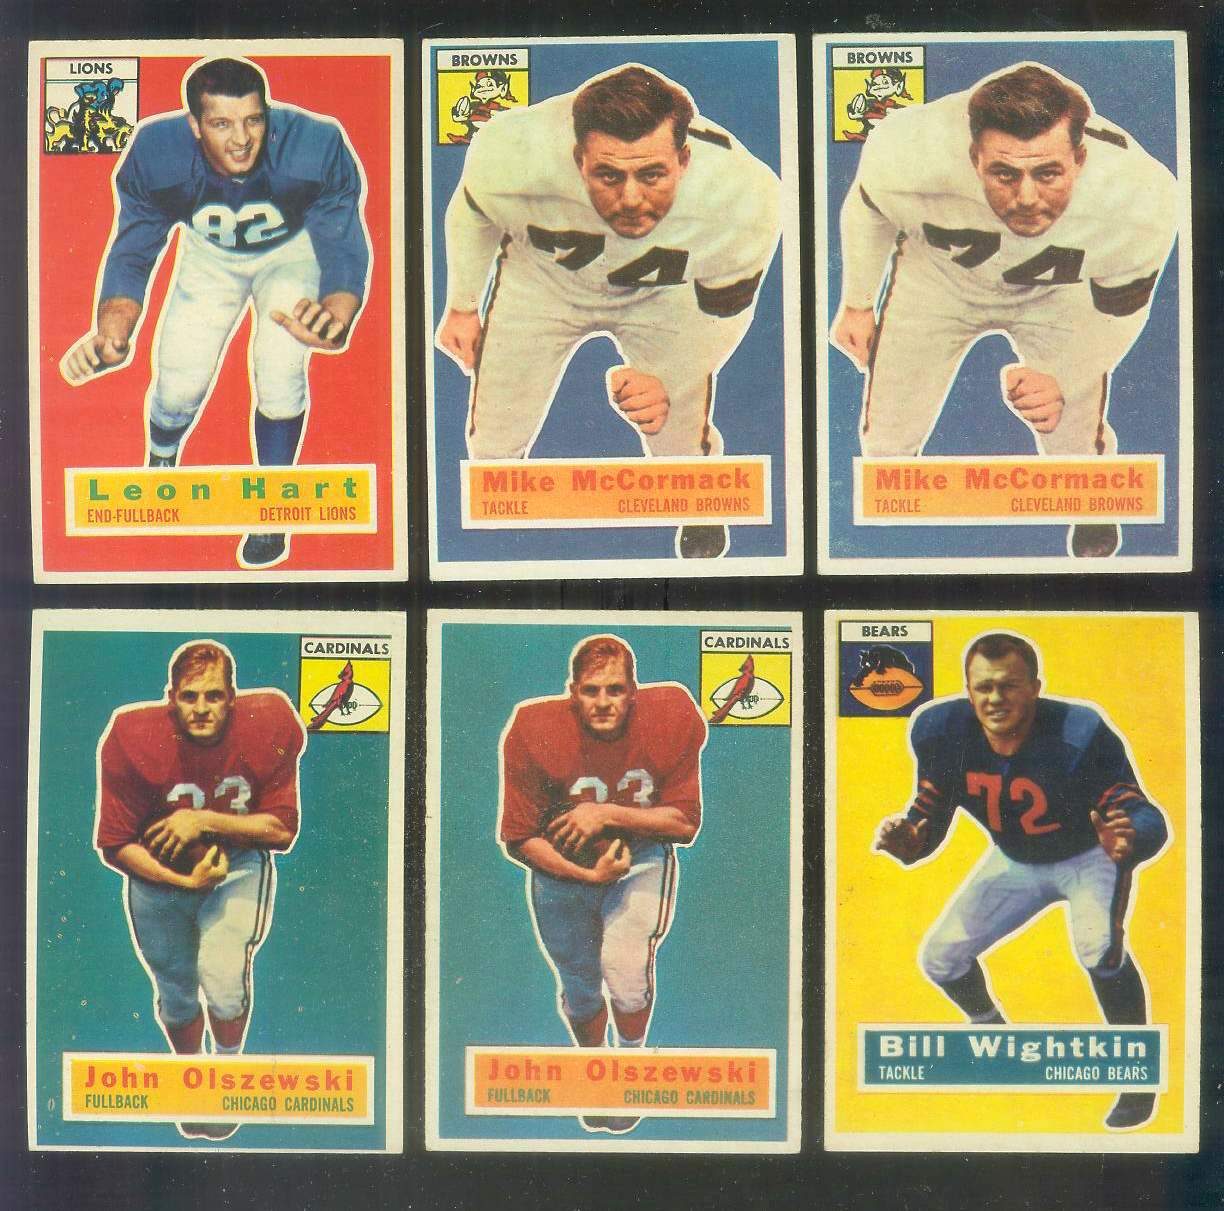 1956 Topps FB #106 John Olszewski SHORT PRINT (Chicago Cardinals) Football cards value